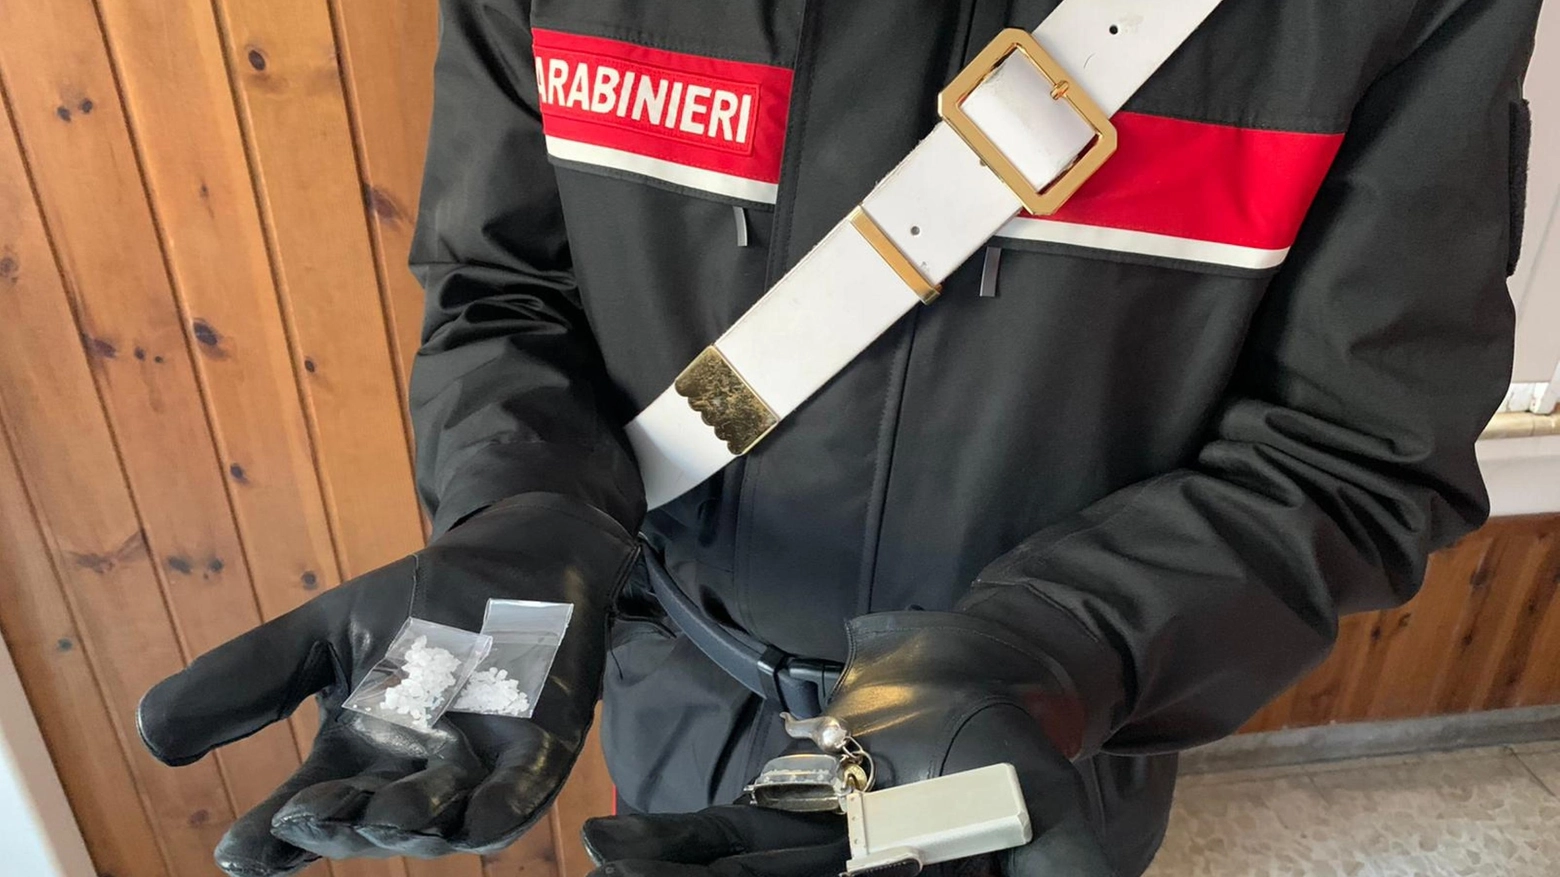 Napoli, vendeva droga in casa: arrestato dai carabinieri